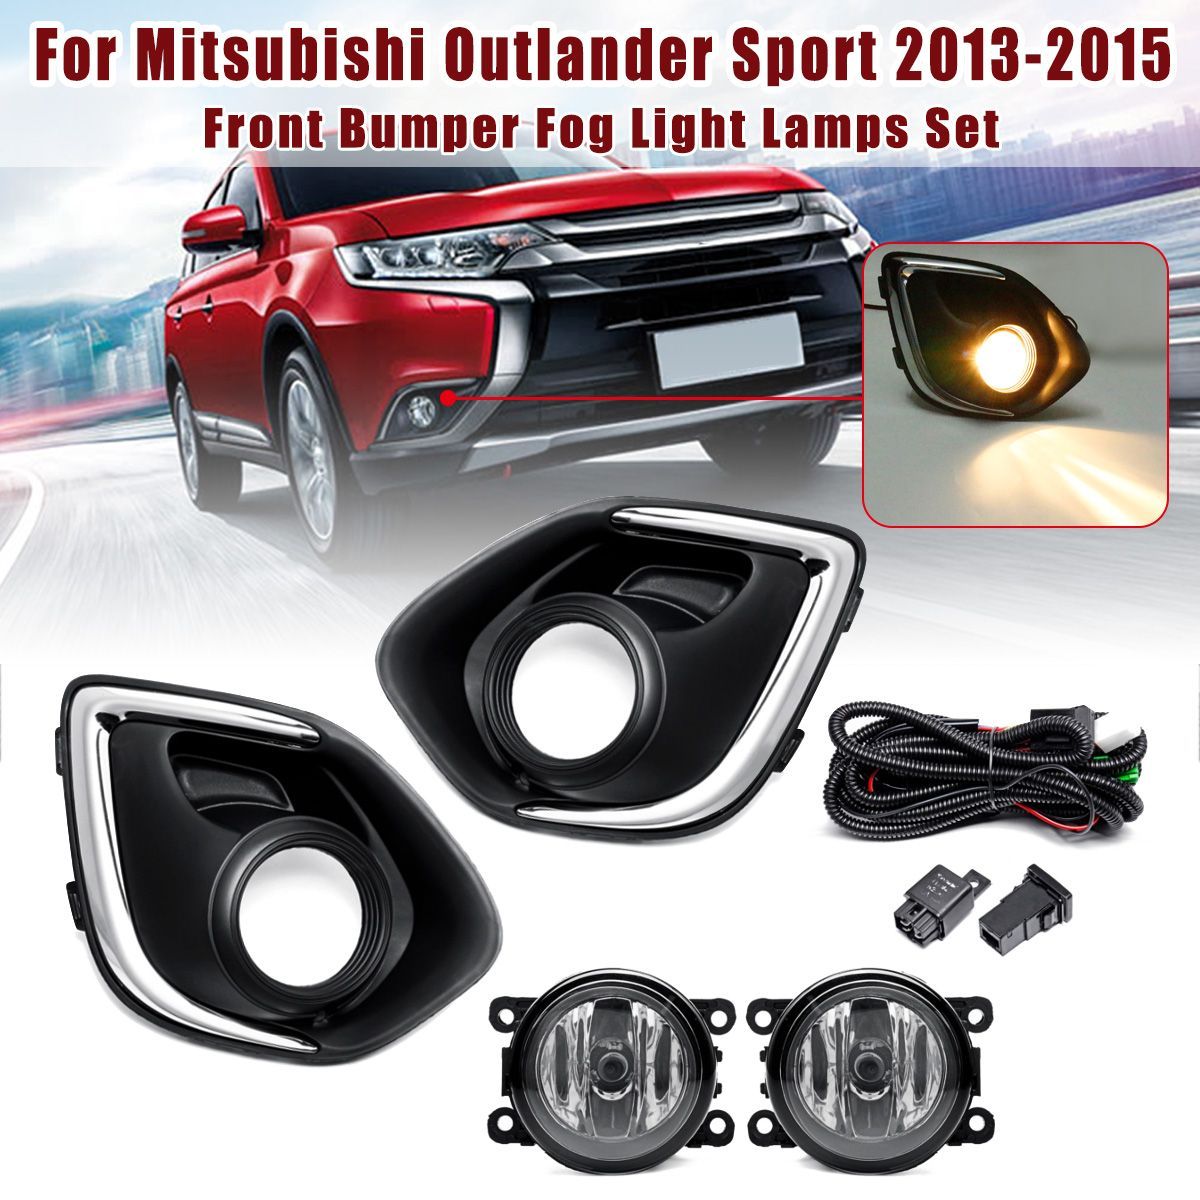 Car-Front-Bumper-Halogen-Fog-Lights-H11-Amber-with-Covers-for-Mitsubishi-Outlander-Sport-2013-2015-1404144